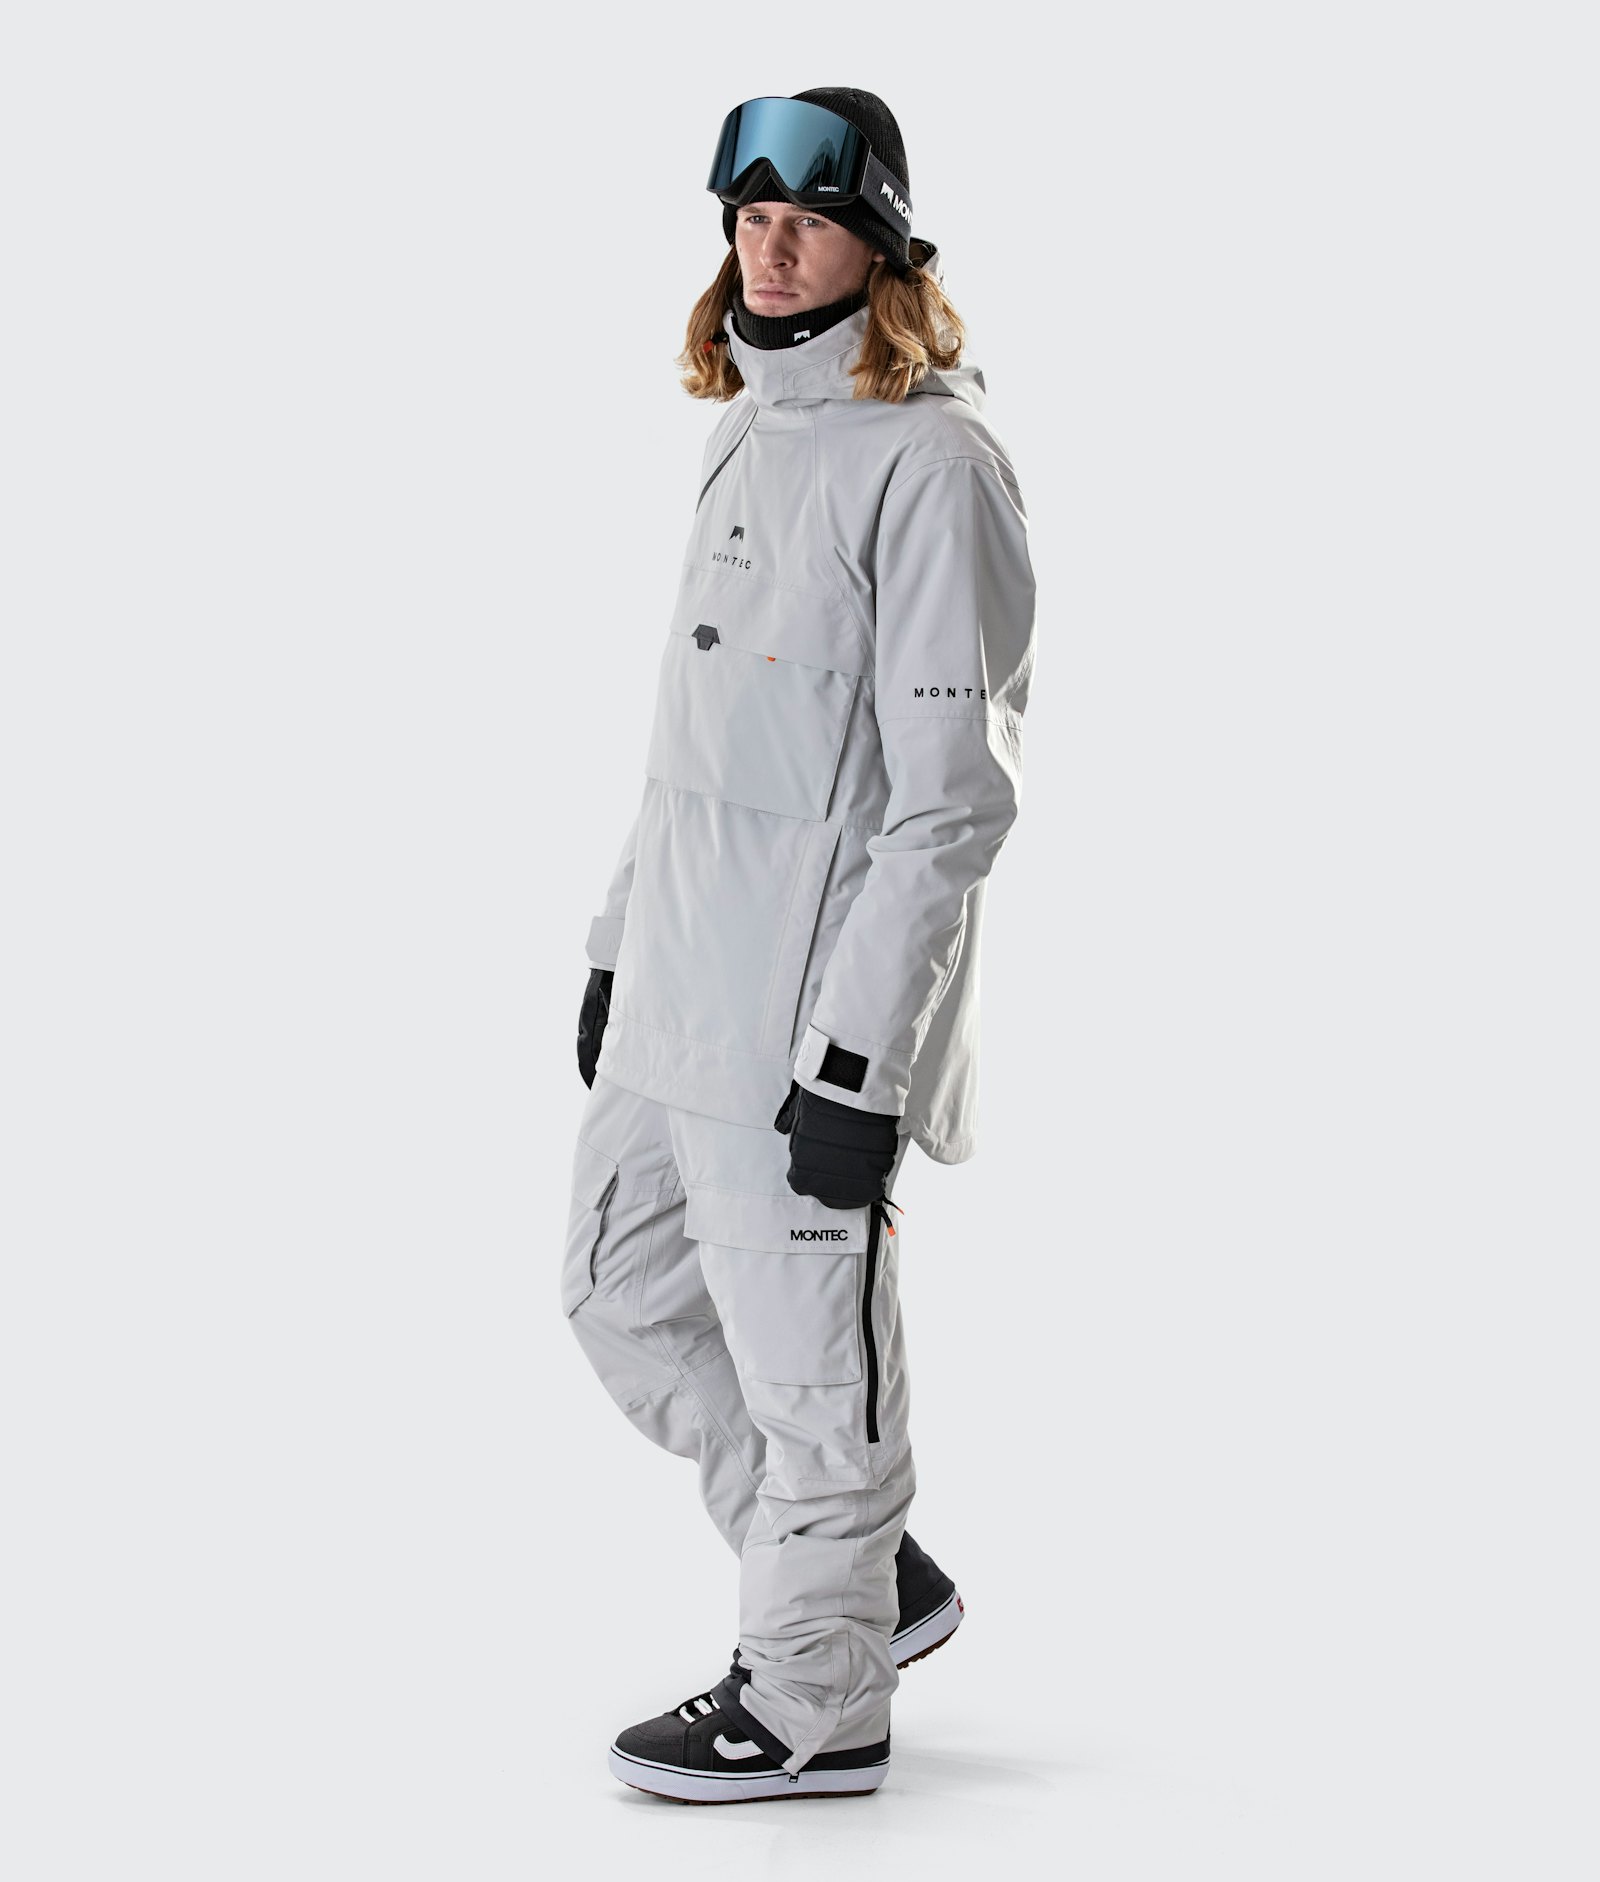 Dune 2020 Snowboard Jacket Men Light Grey